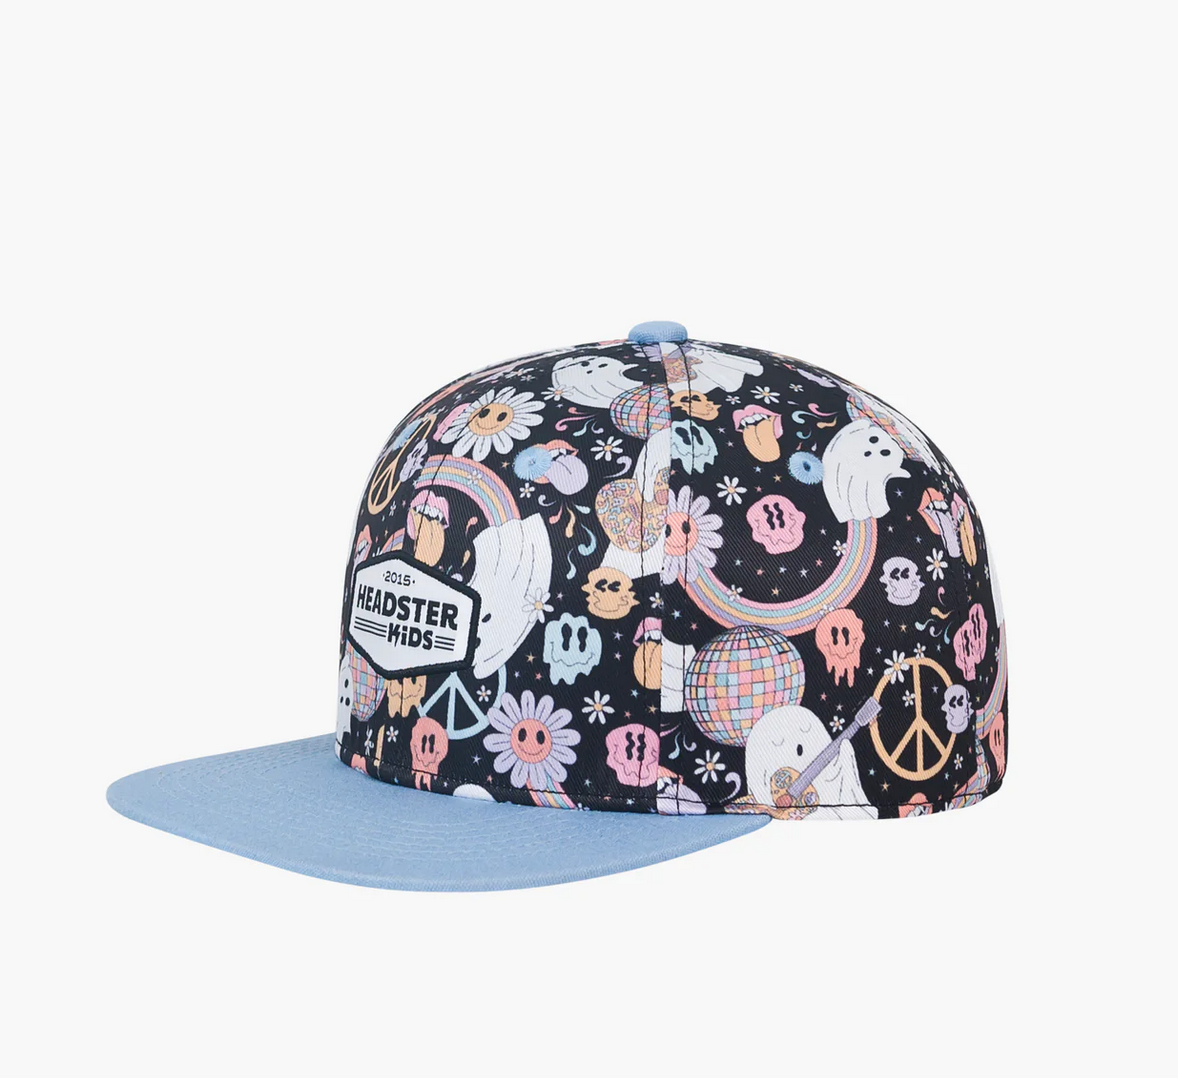 Headster Boo Snapback Hat – Citizen Kid